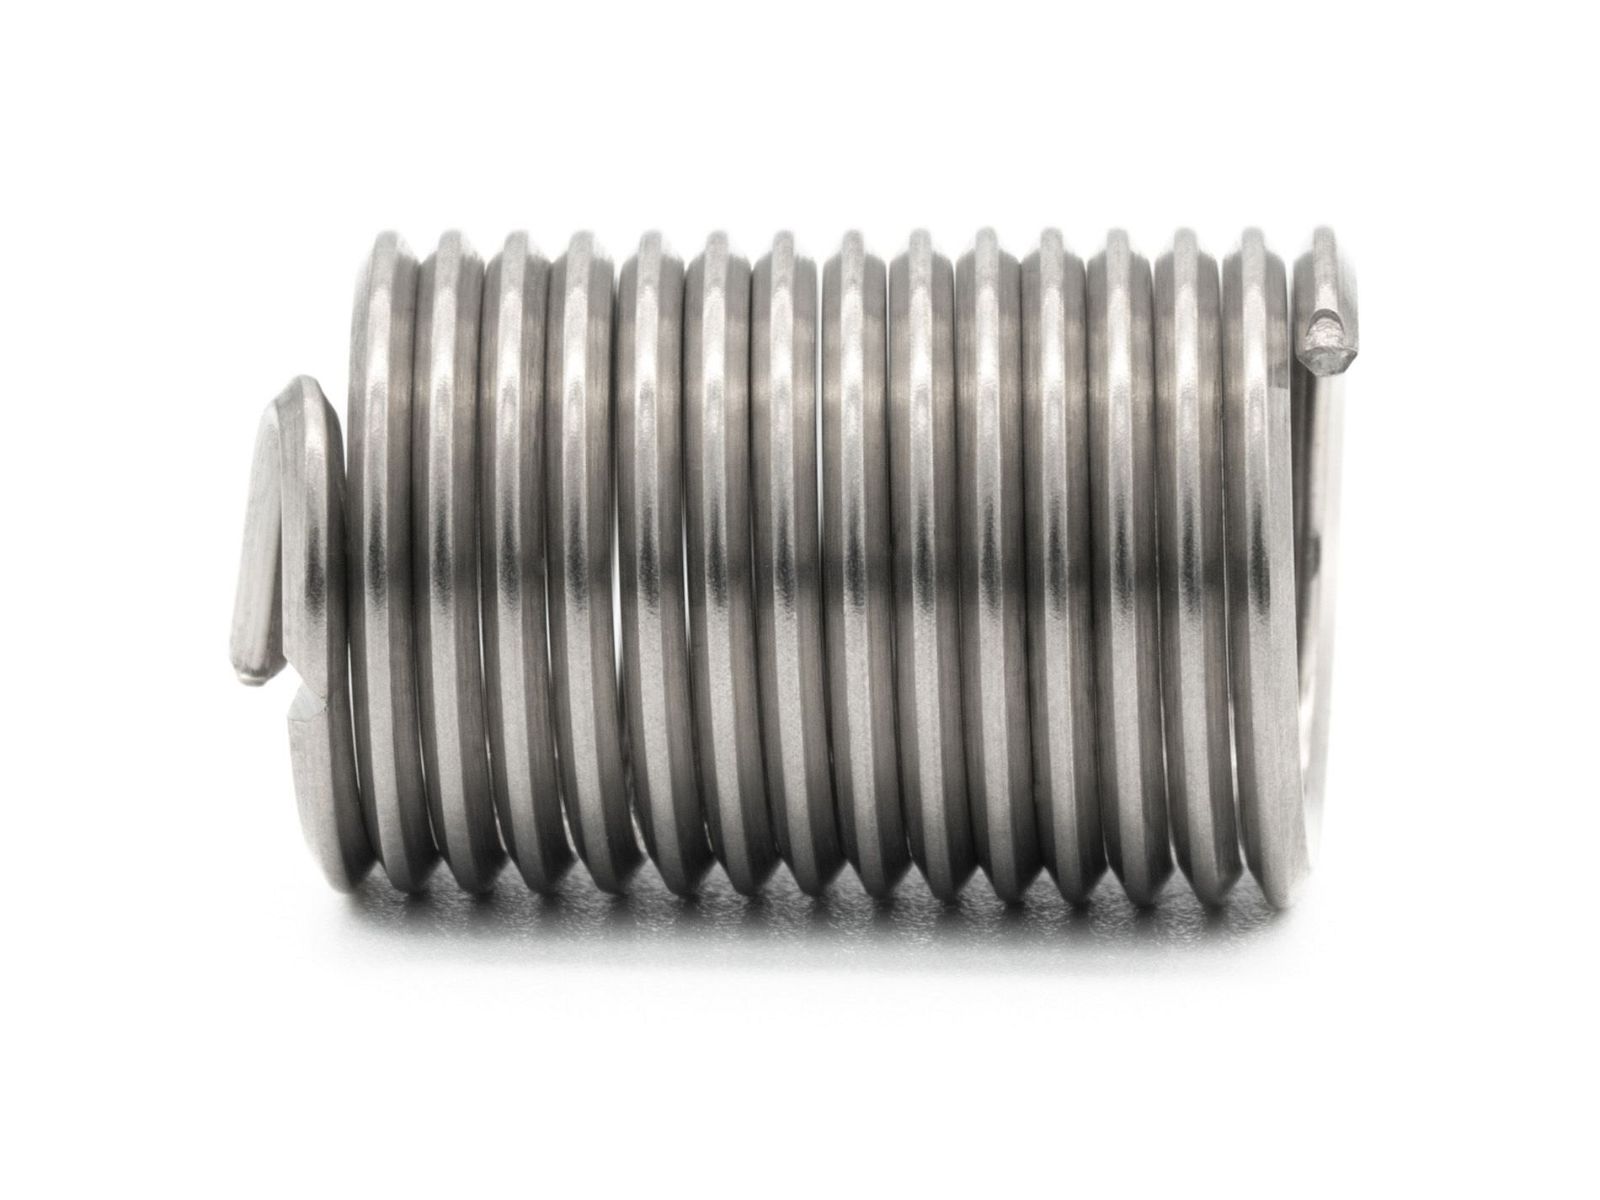 BaerCoil Wire Thread Inserts BSW 1/4 x 20 - 2.5 D (15.88 mm) - free running - 100 pcs.